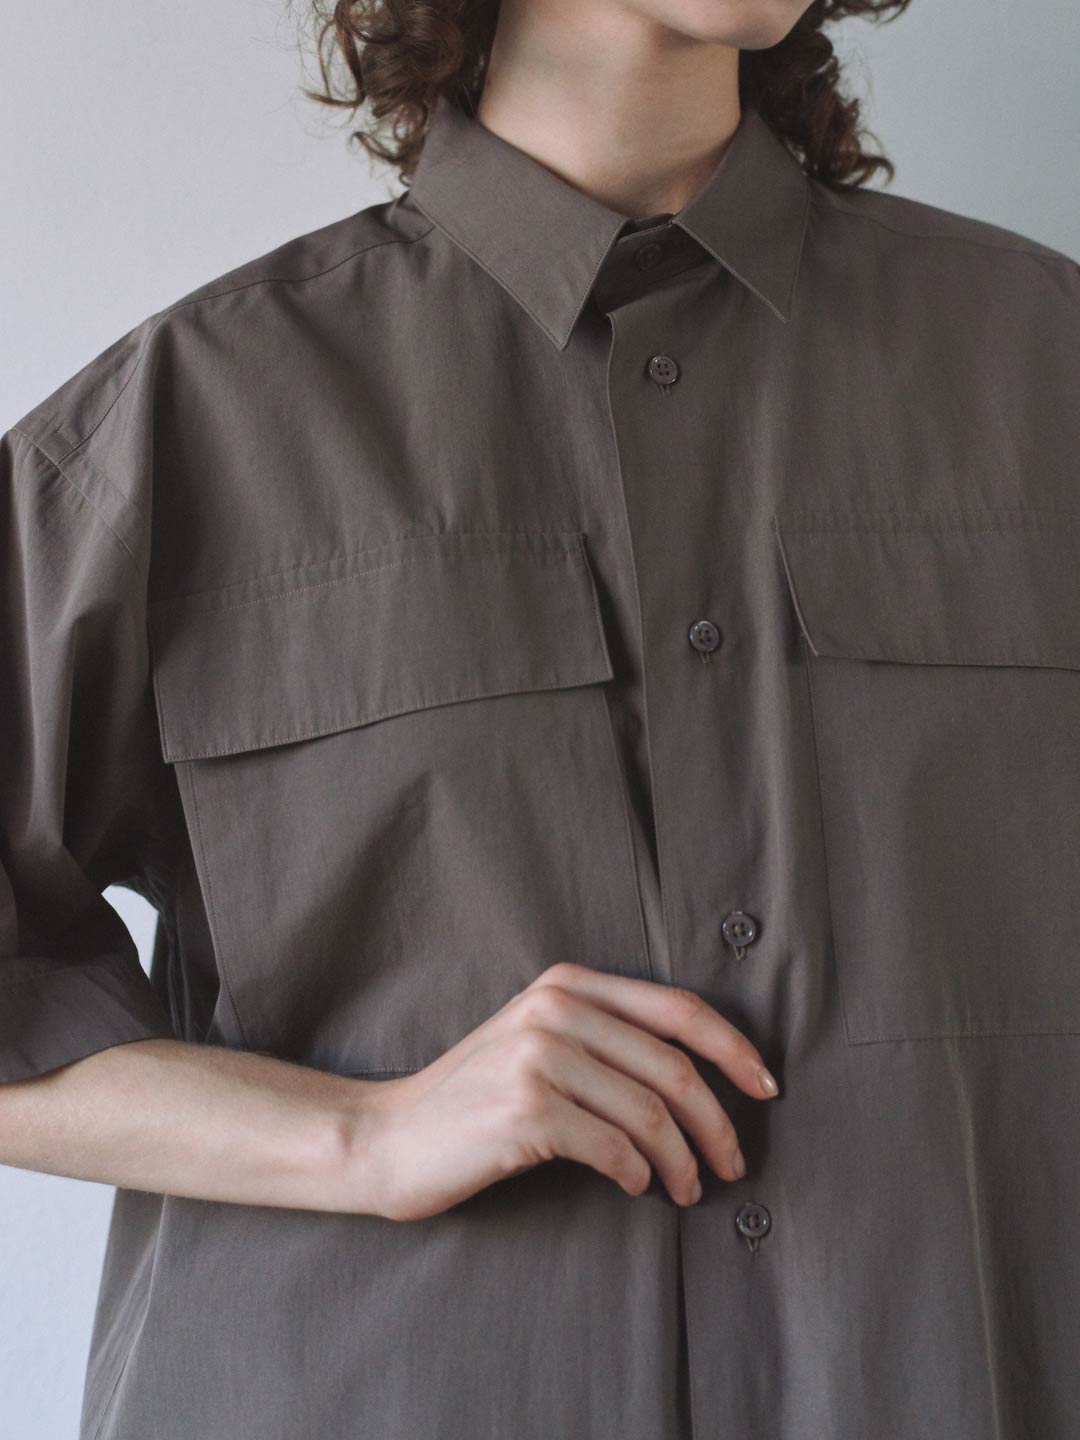 No.0394 Fine Cotton Short-Sleeve Shirt - Taupe